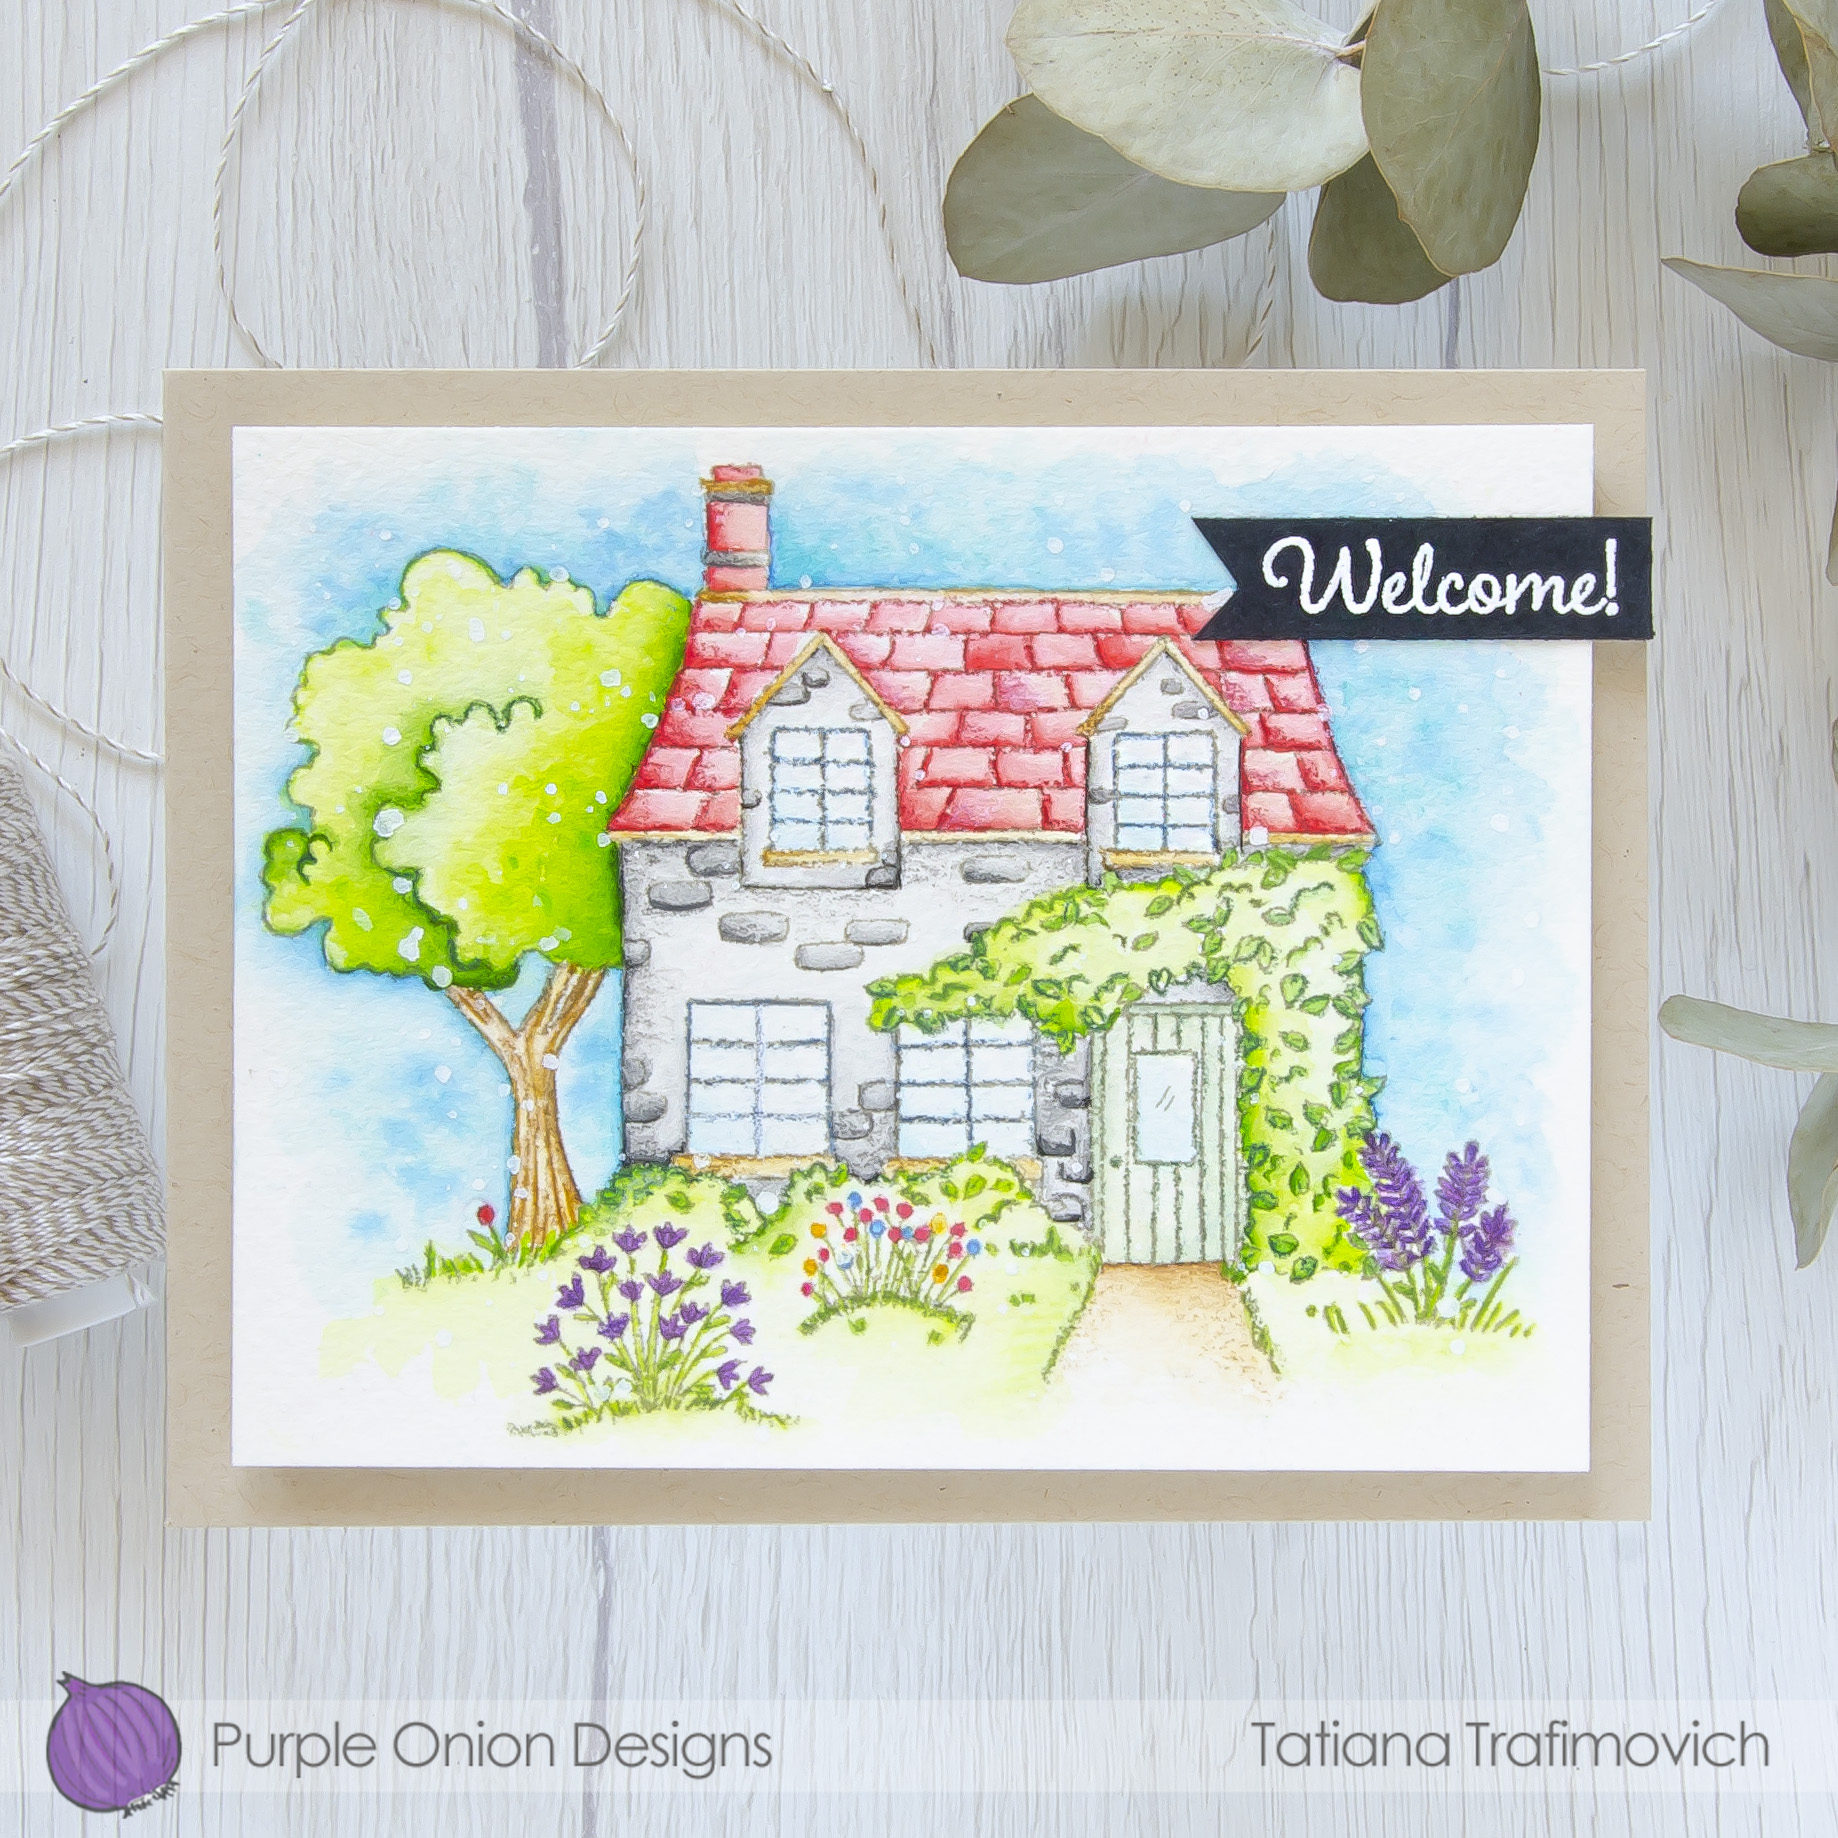 Welcome #handmade card by Tatiana Trafimovich #tatianacraftandart - stamps by Purple Onion Designs 